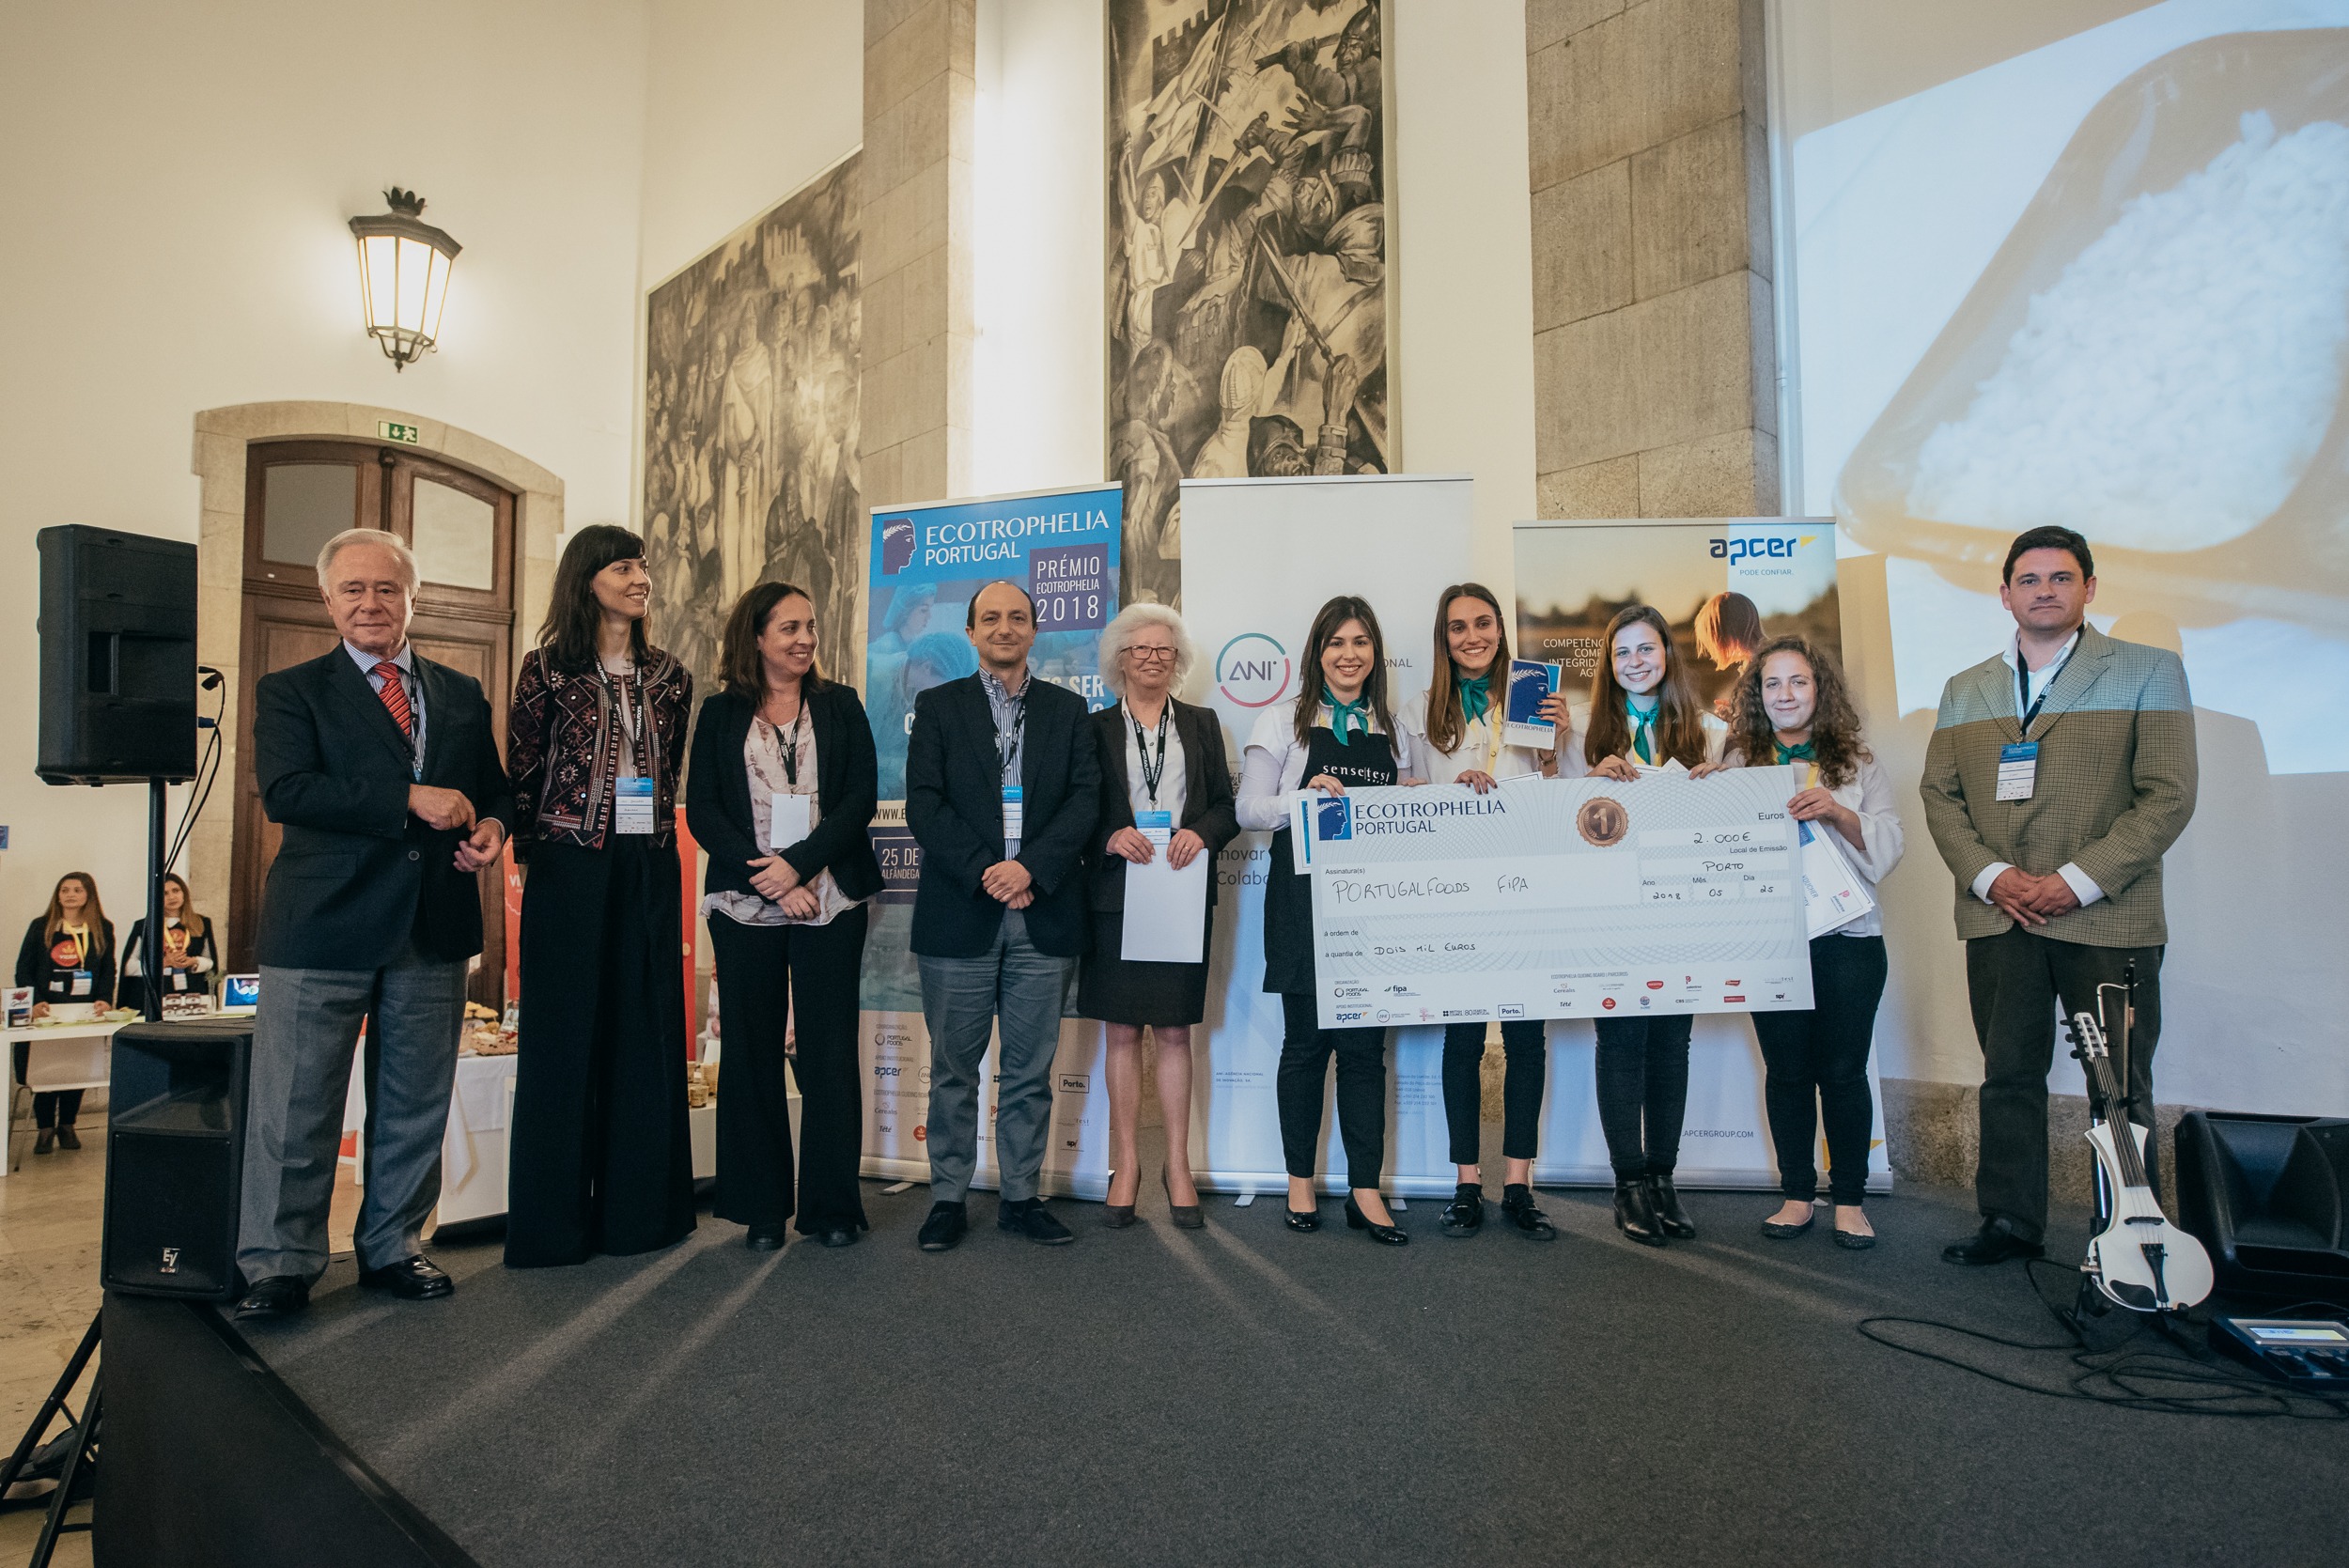 Ecotrophelia Portugal, Media, Clipping, Bean Ready é a grande vencedora do Prémio Ecotrophelia Portugal 2018